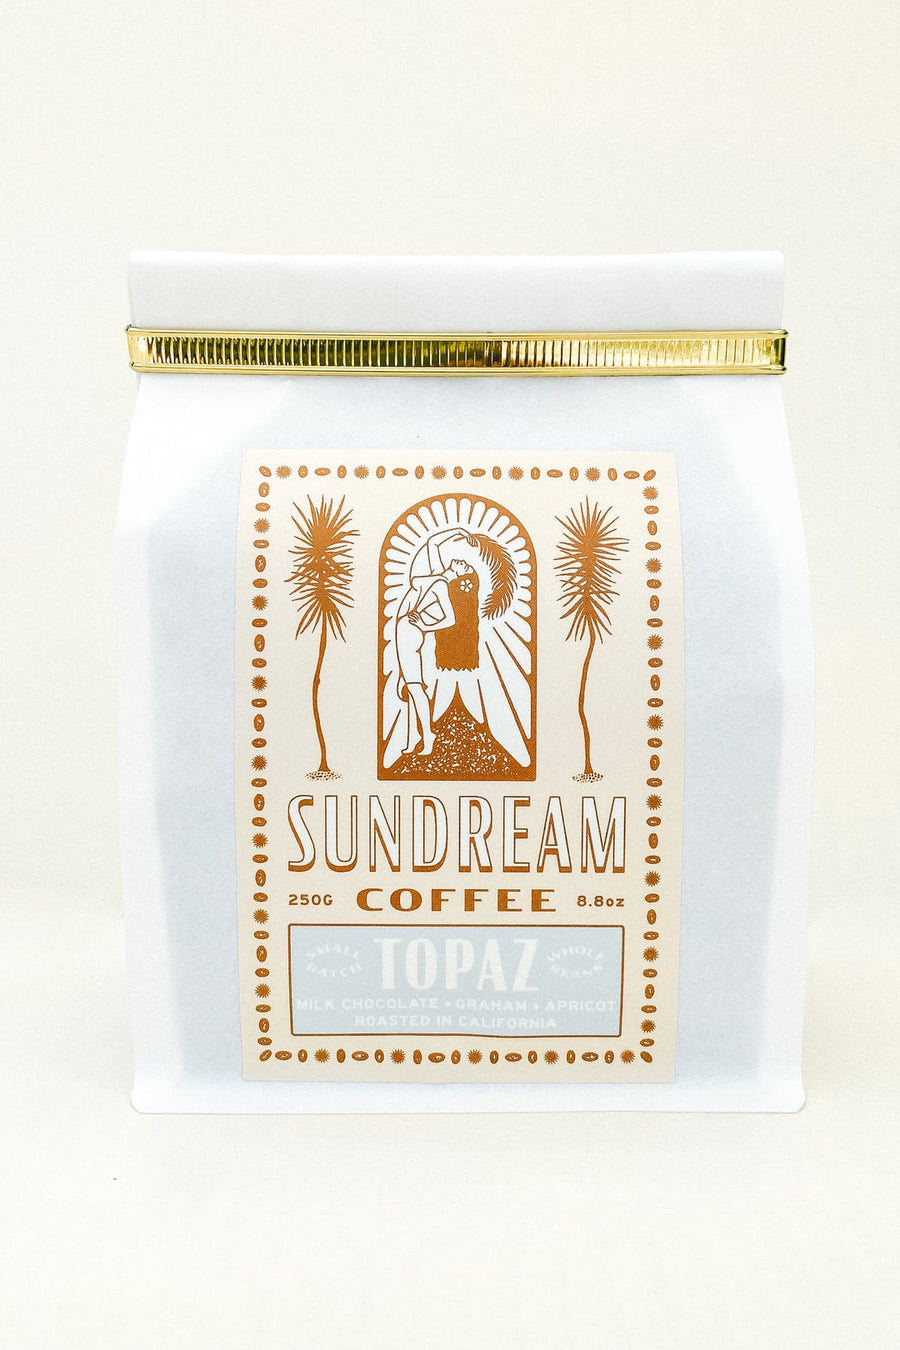 Sundream Coffee - Topaz Blend